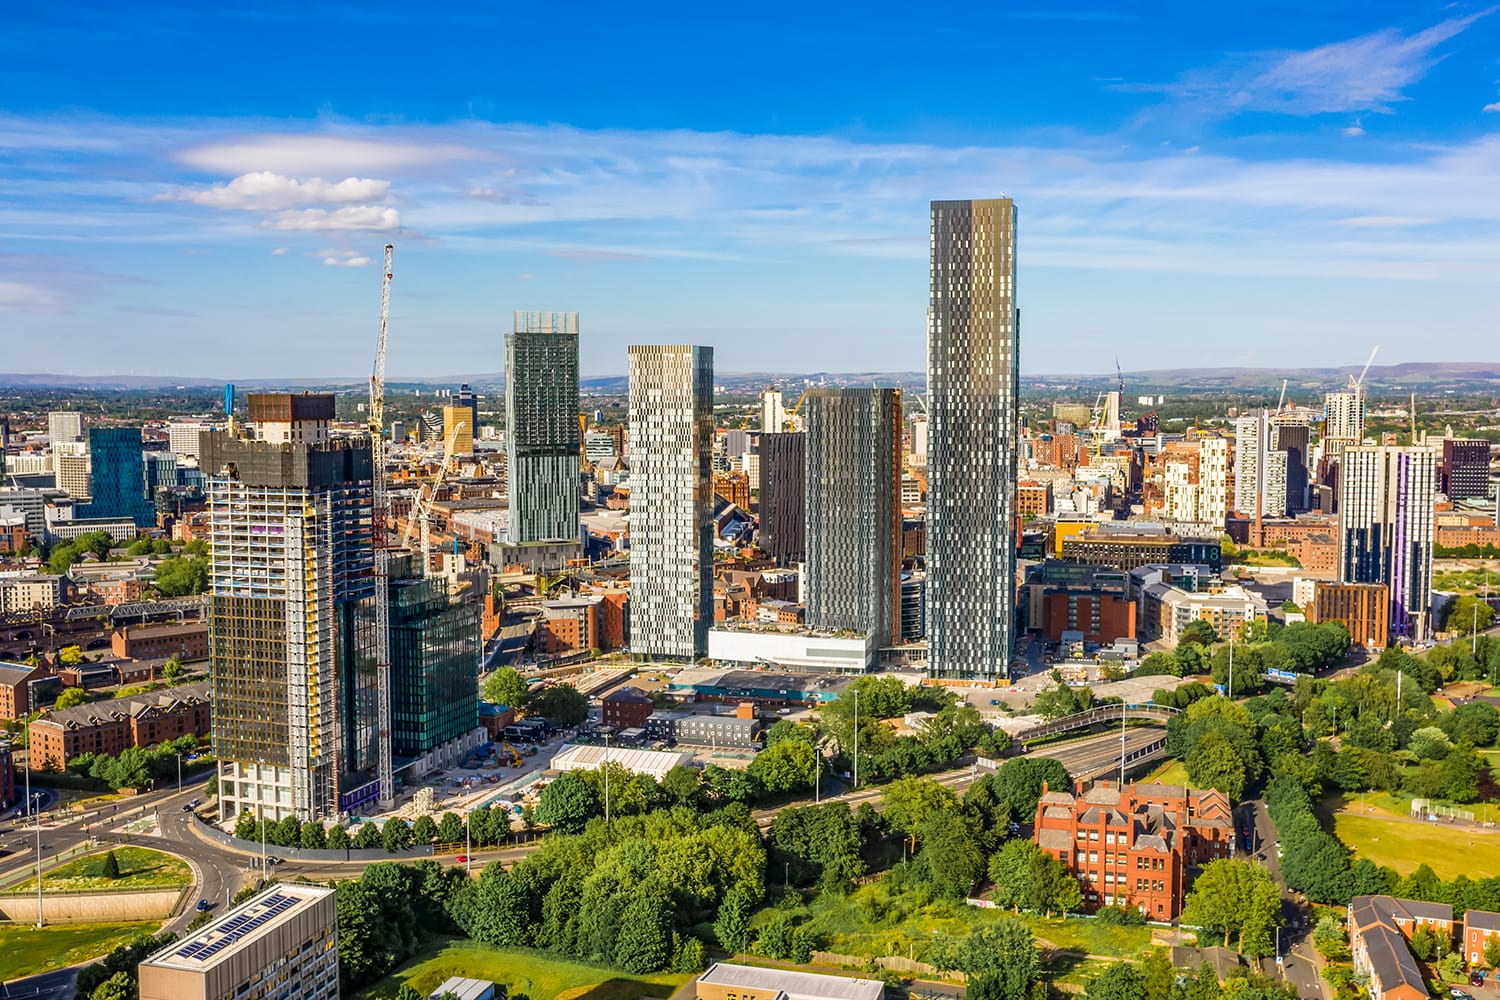 Aerial shot of Manchester, UK